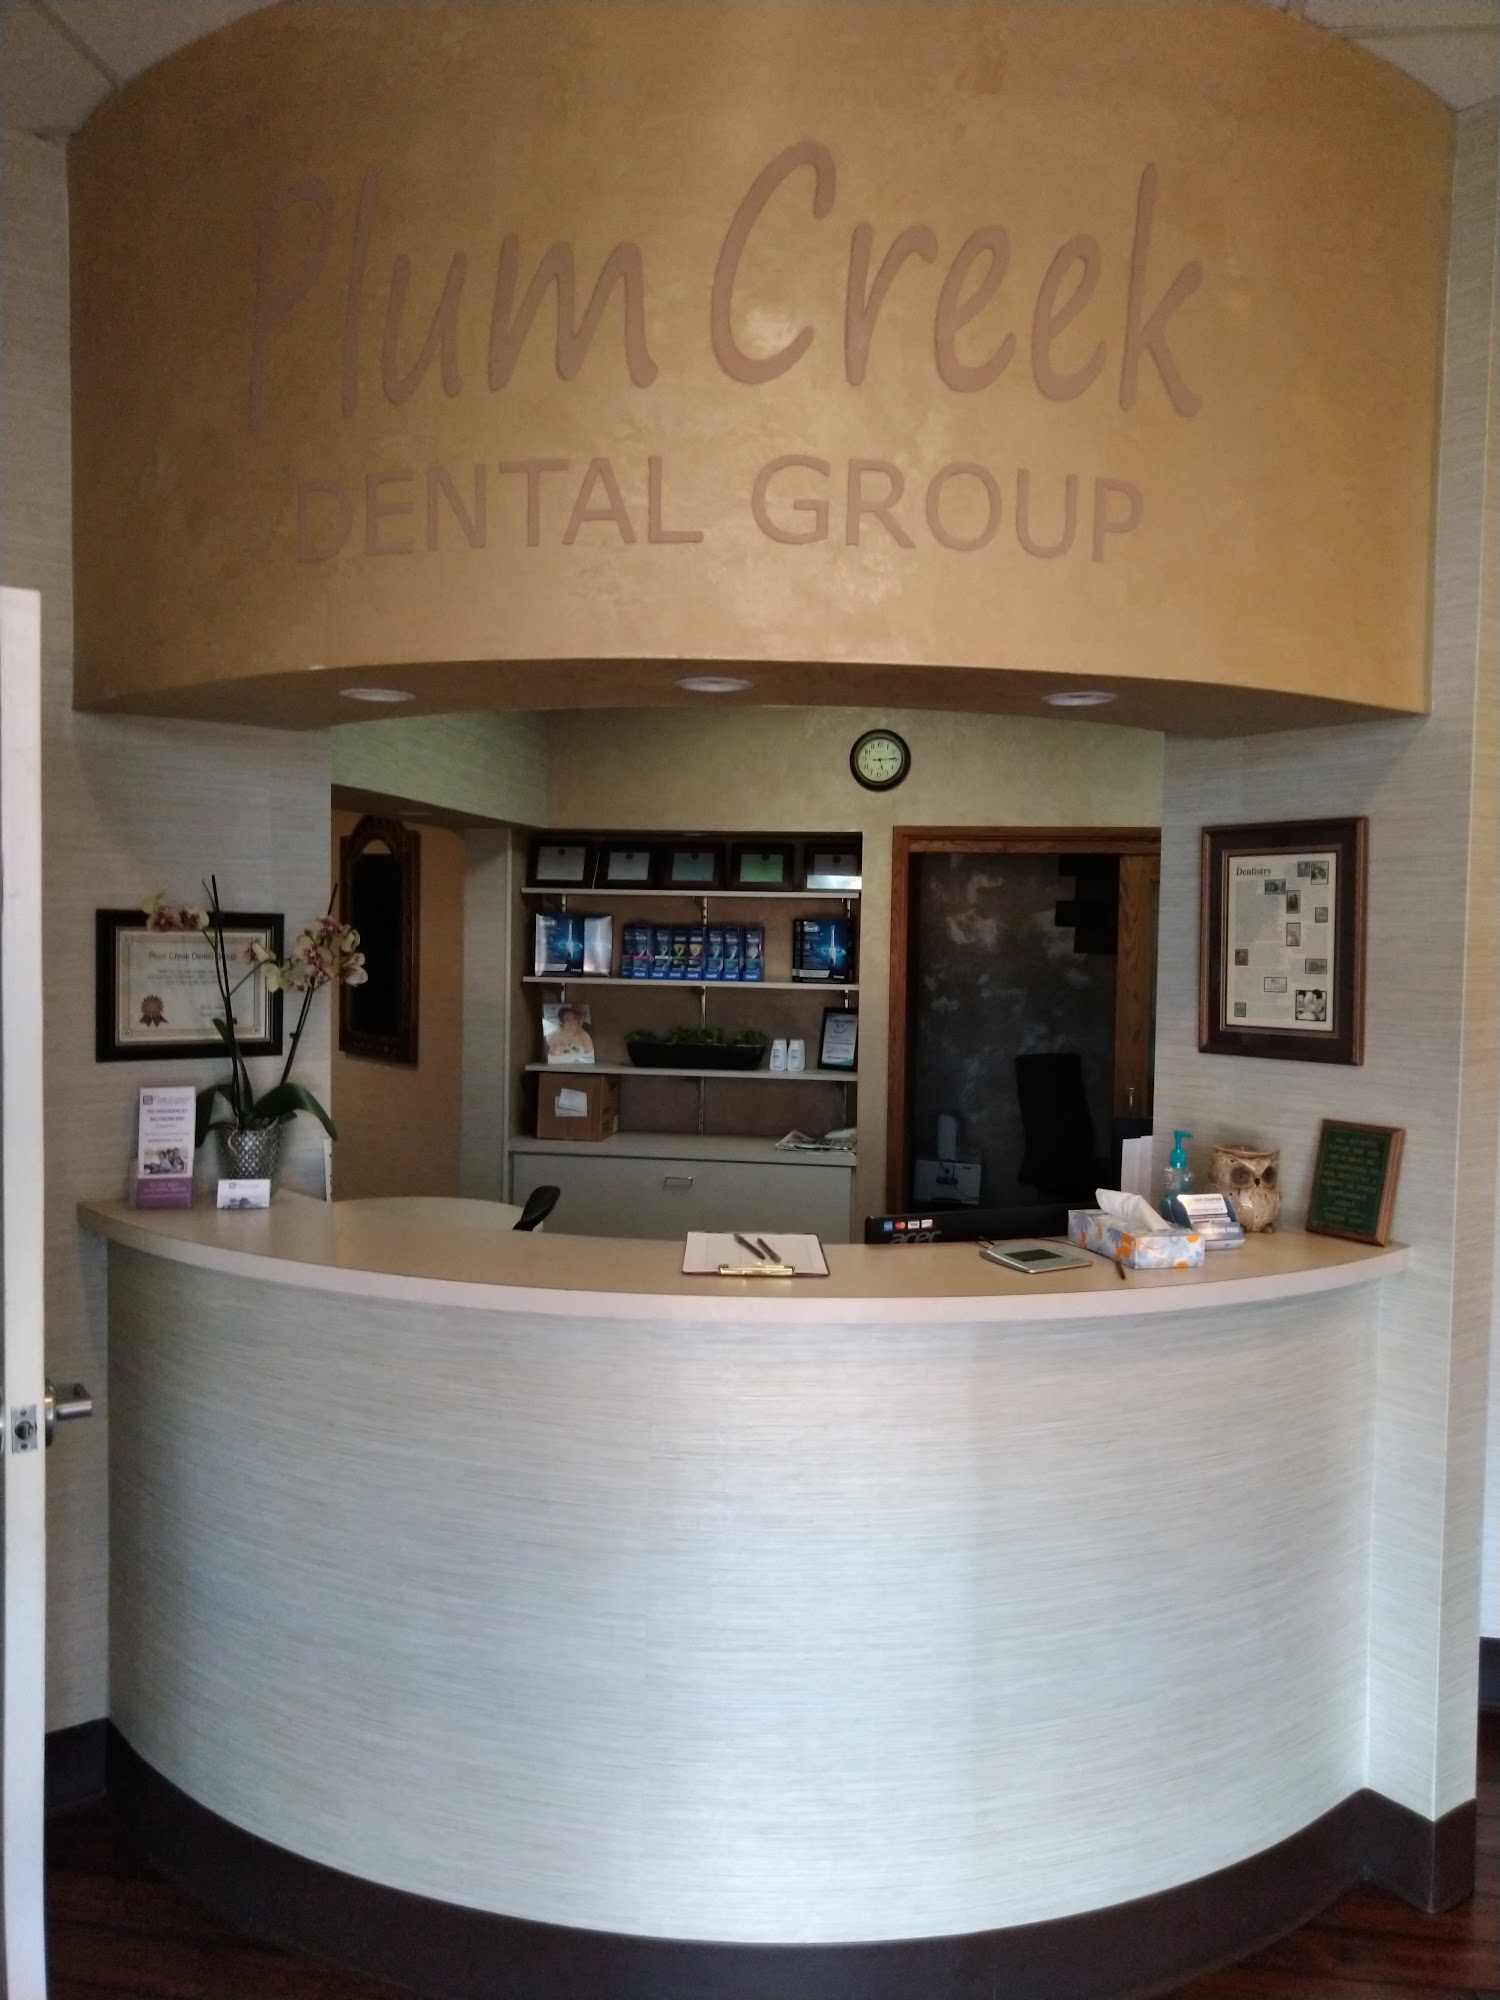 Plum Creek Dental Group